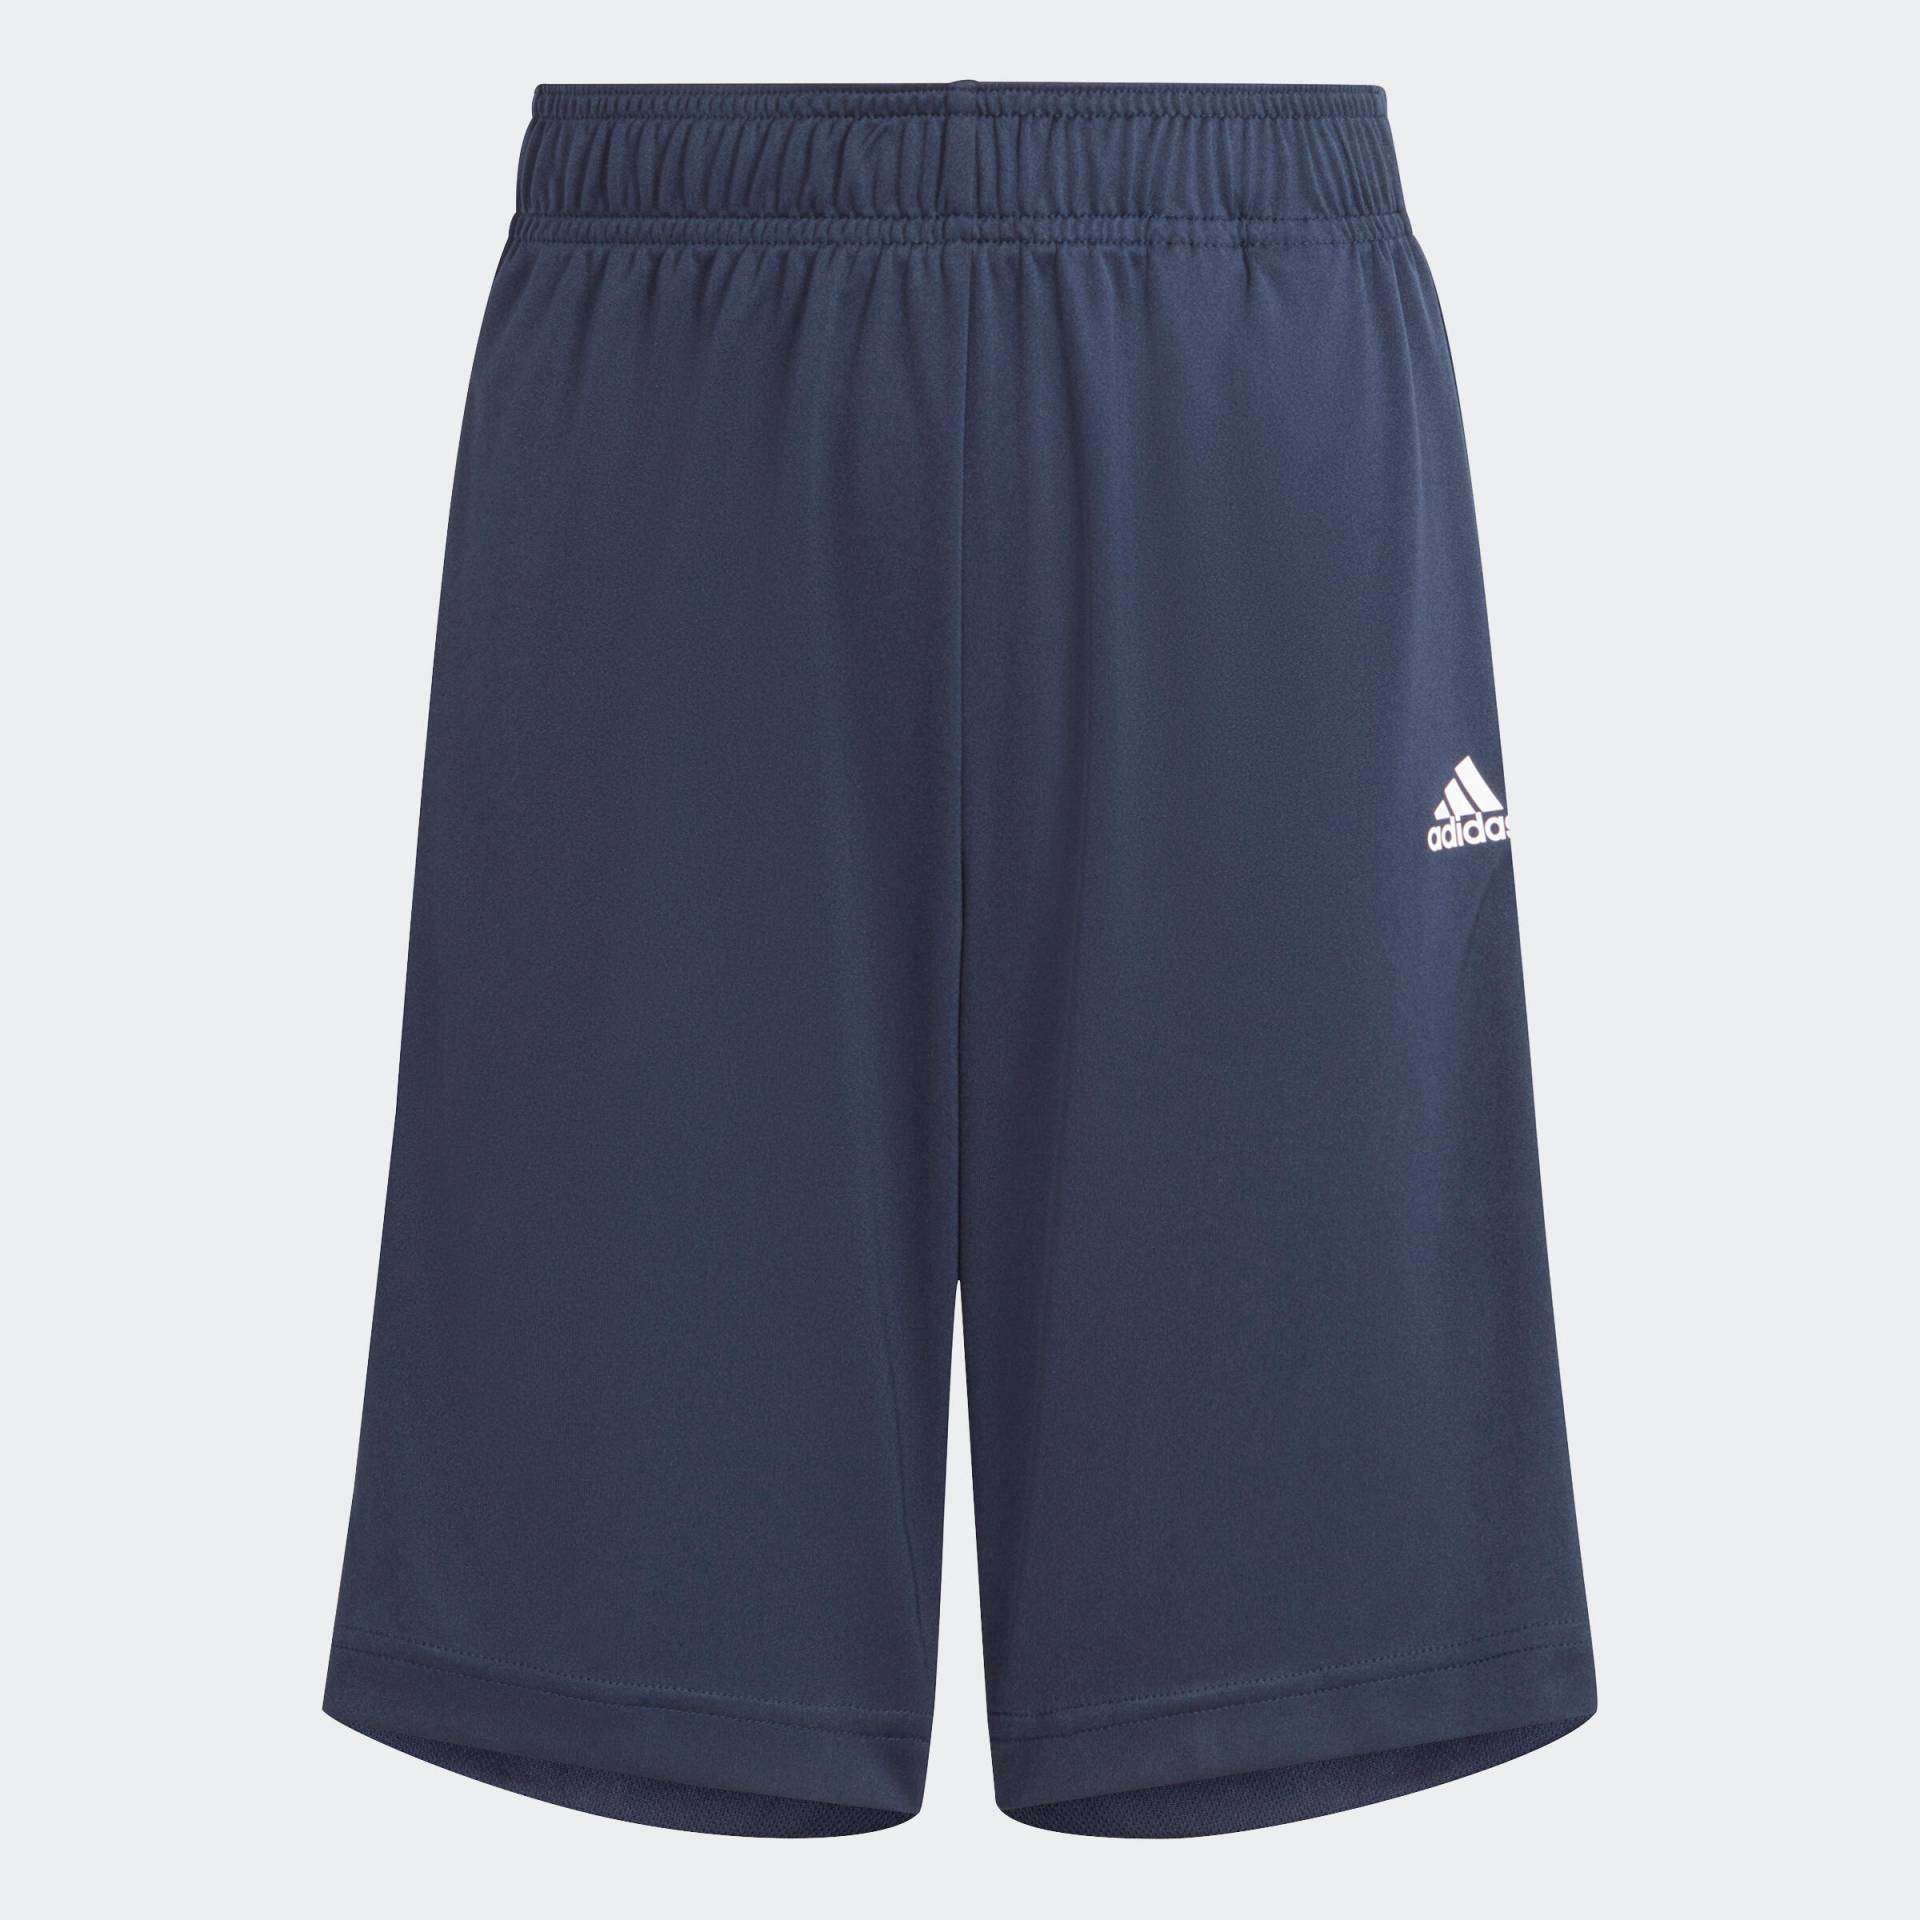 Kinder Fussball Shorts - ADIDAS Sereno marineblau von Adidas